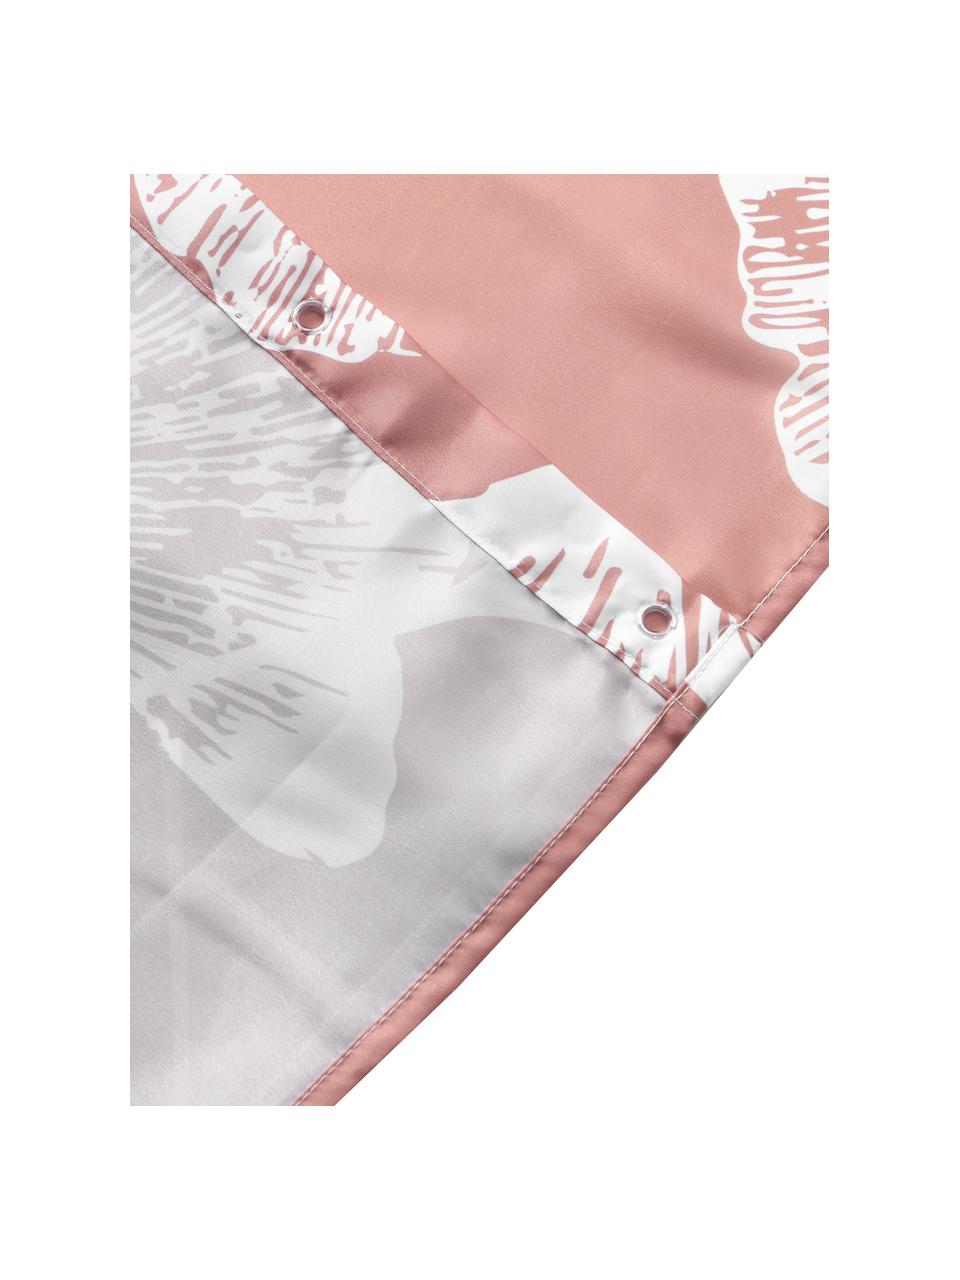 Duschvorhang Mare in Rosa, 100 % Polyester, Dunkelrosa, Weiß, B 180 x L 200 cm